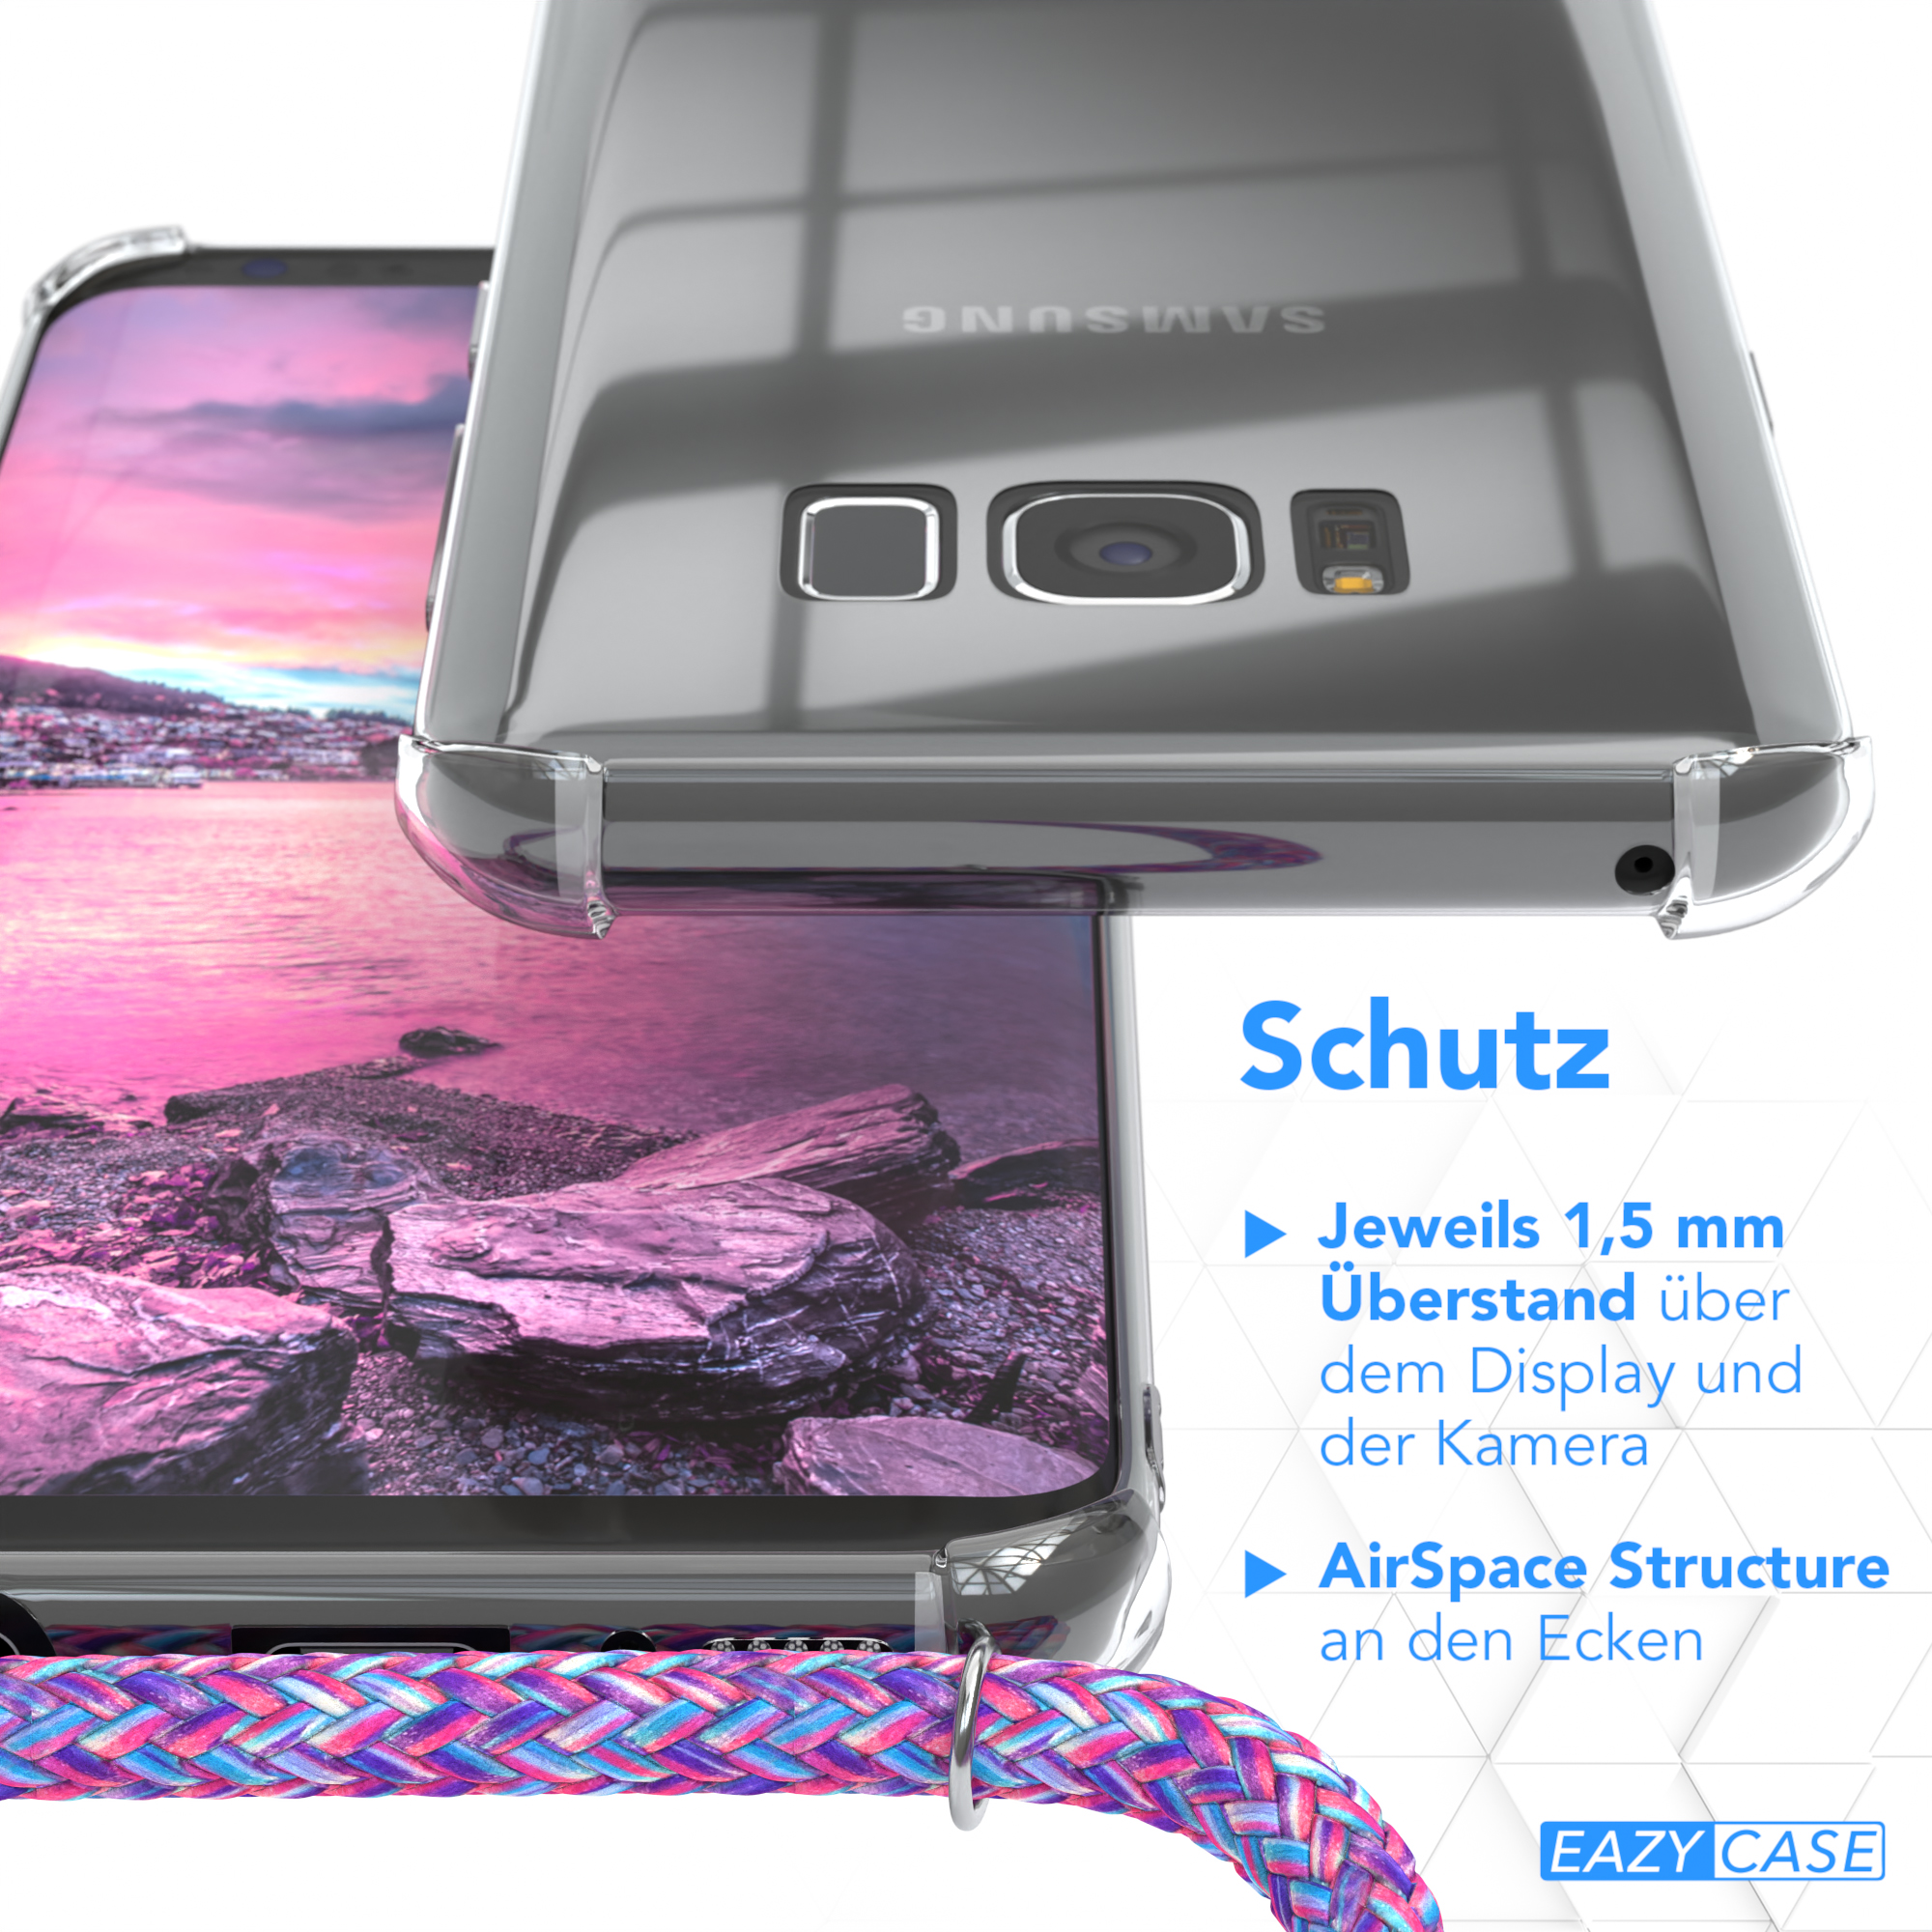 Samsung, EAZY Umhängeband, / Cover mit Clear Silber Galaxy Lila S8, Umhängetasche, CASE Clips